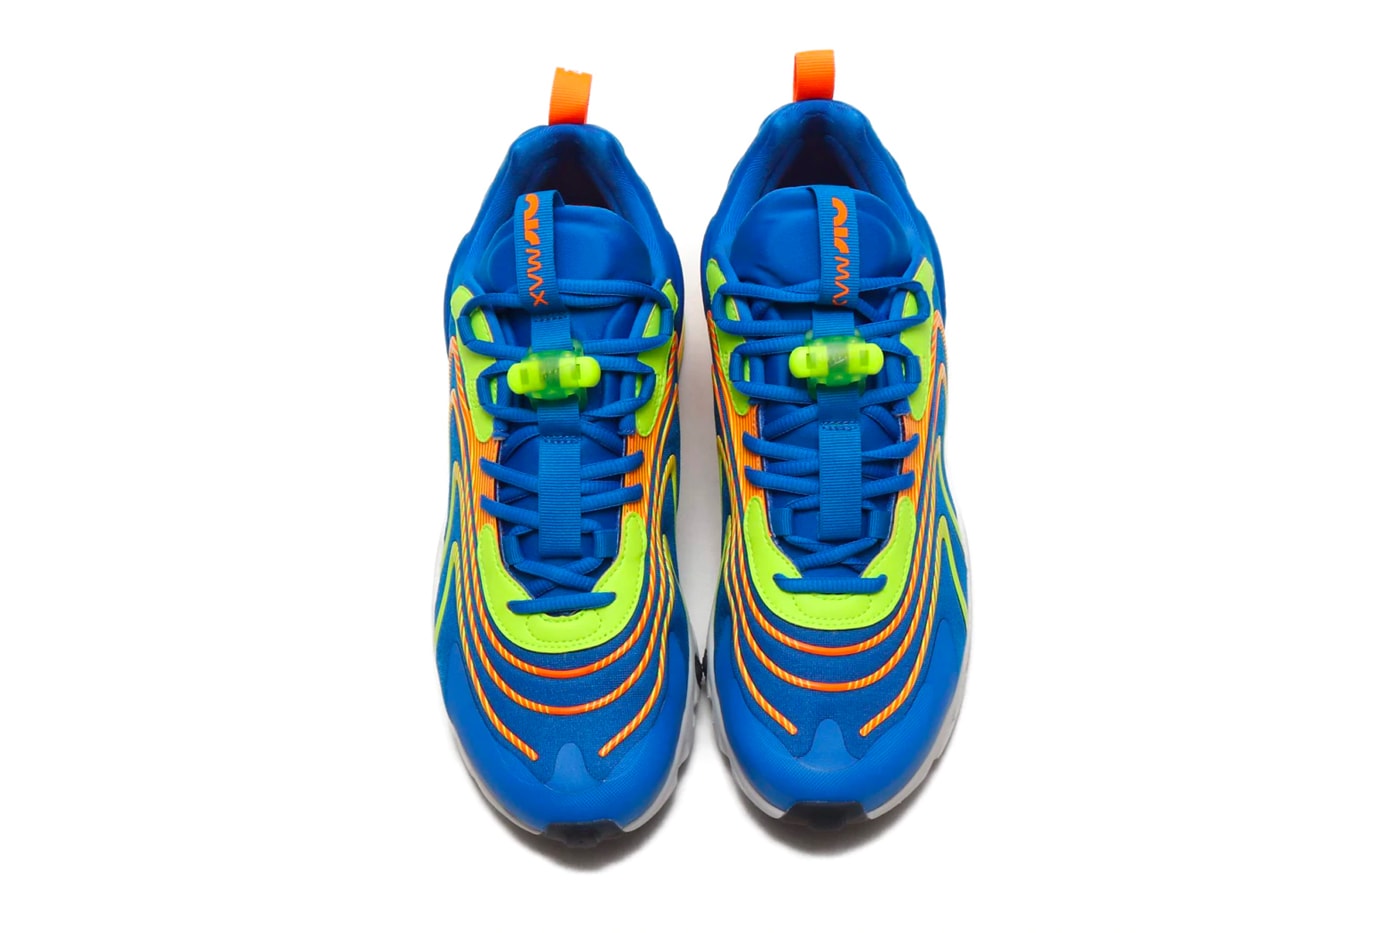 Nike Air Max 270 React ENG Laser Crimson Laser Orange VOLT PLATINUM TINT SOAR TOTAL ORANGE cd0113 401 601 sneakers shoes footwear kicks runners trainers swoosh spring 2020